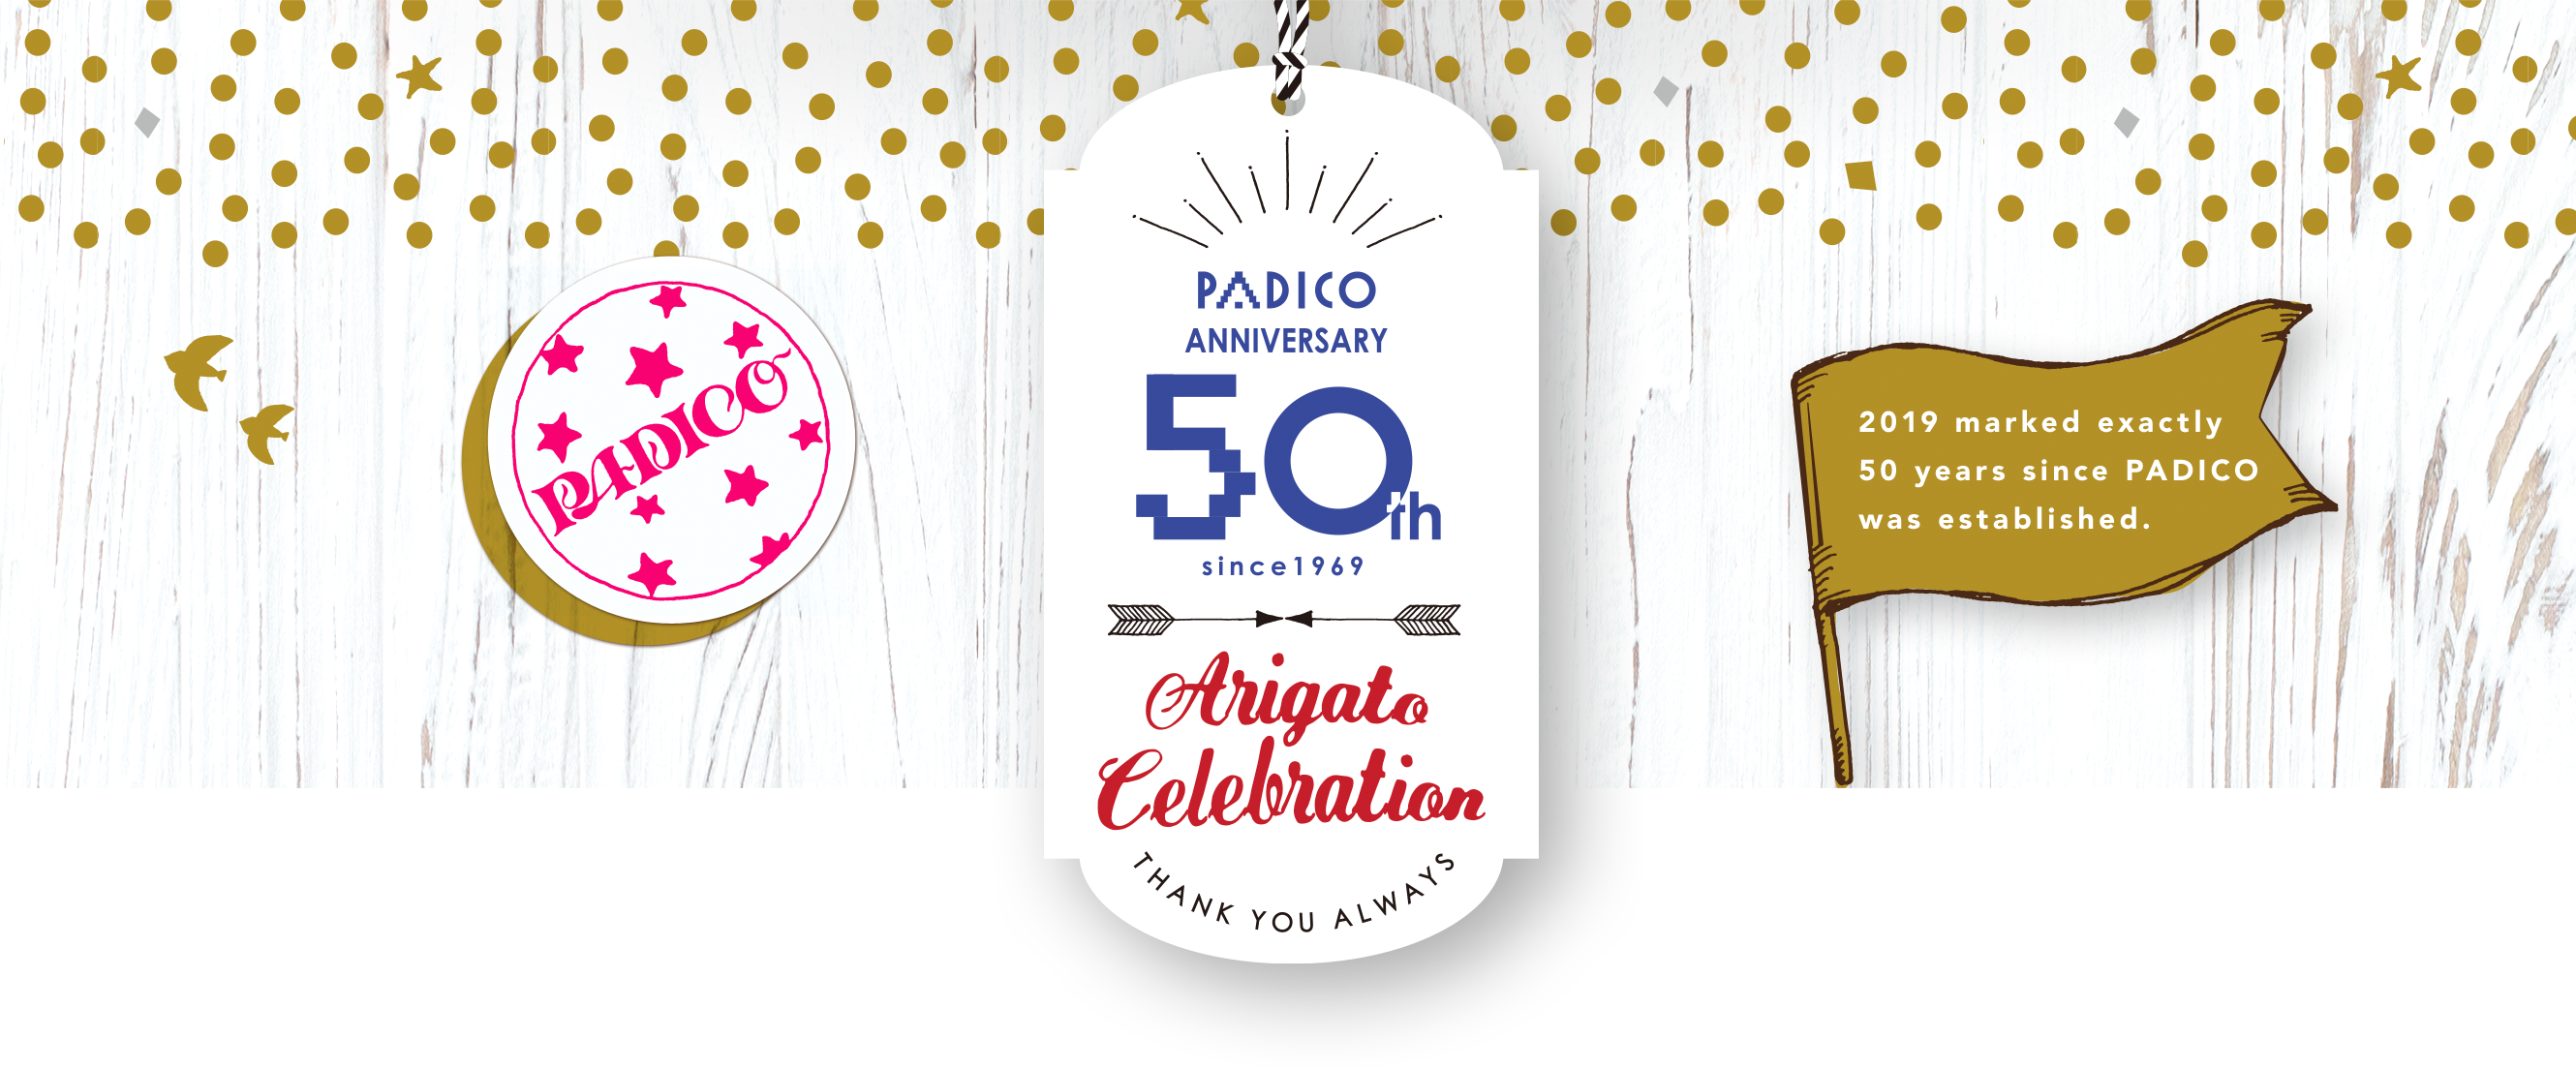 PADICO ANNIVERSARY 50th Arigato Celebration　2019 marked exactly 50 years since PADICO was established.